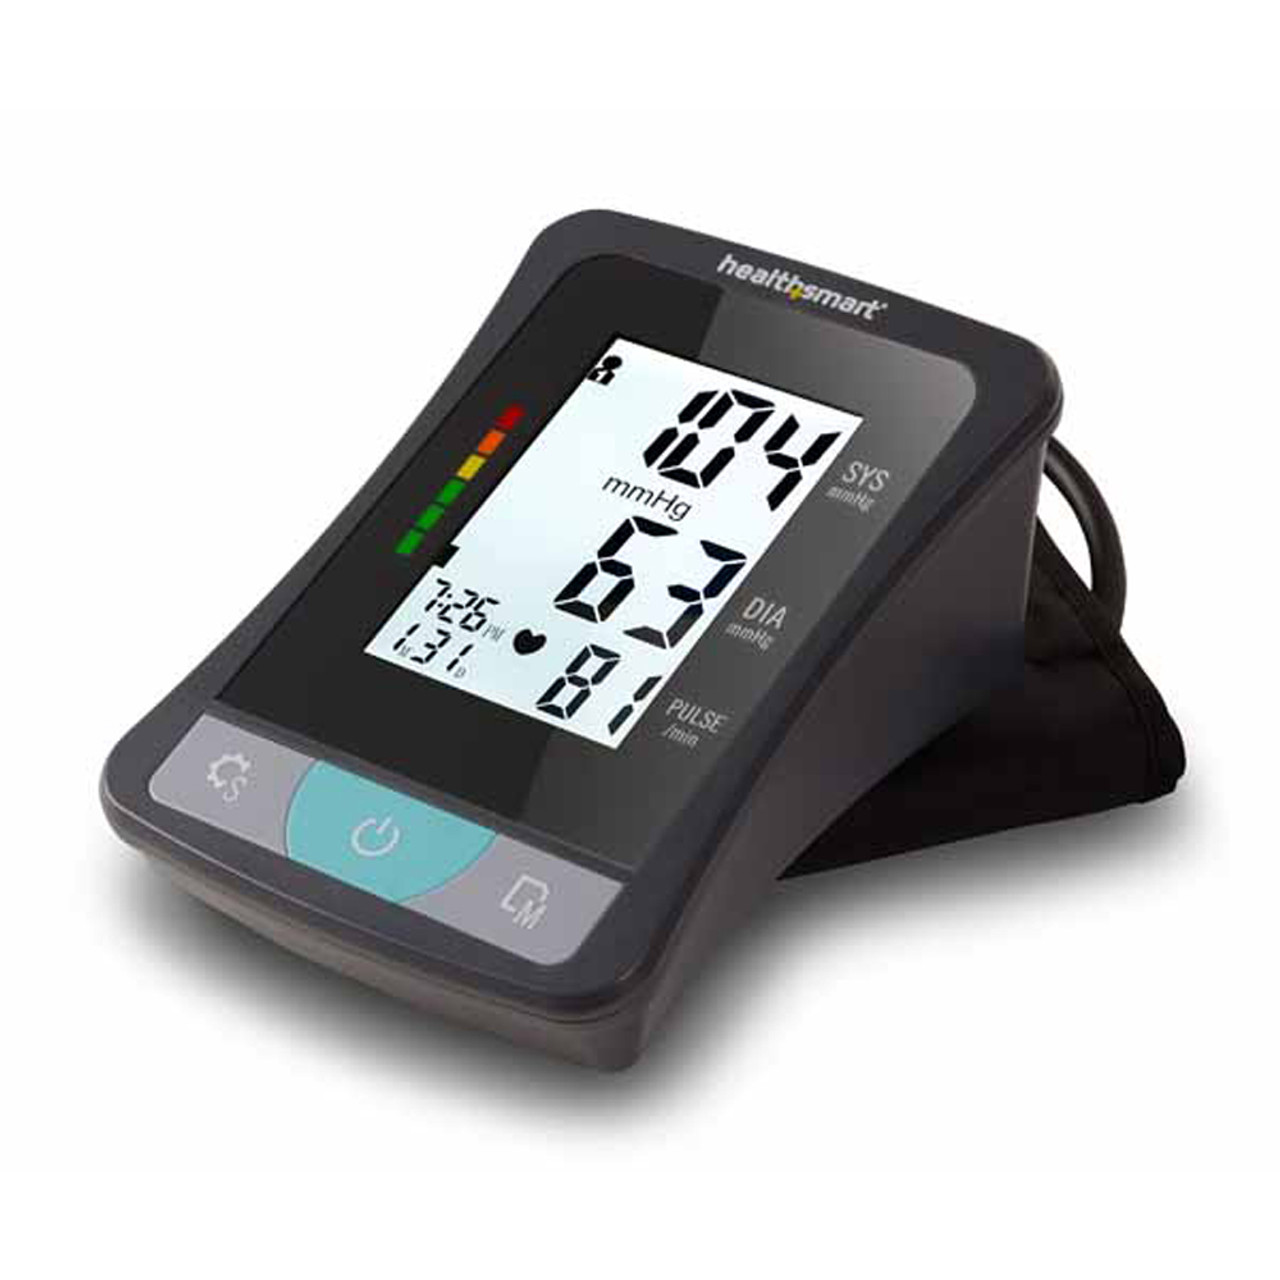 HealthSmart Standard Cuff Digital Blood Pressure Monitor Model 04